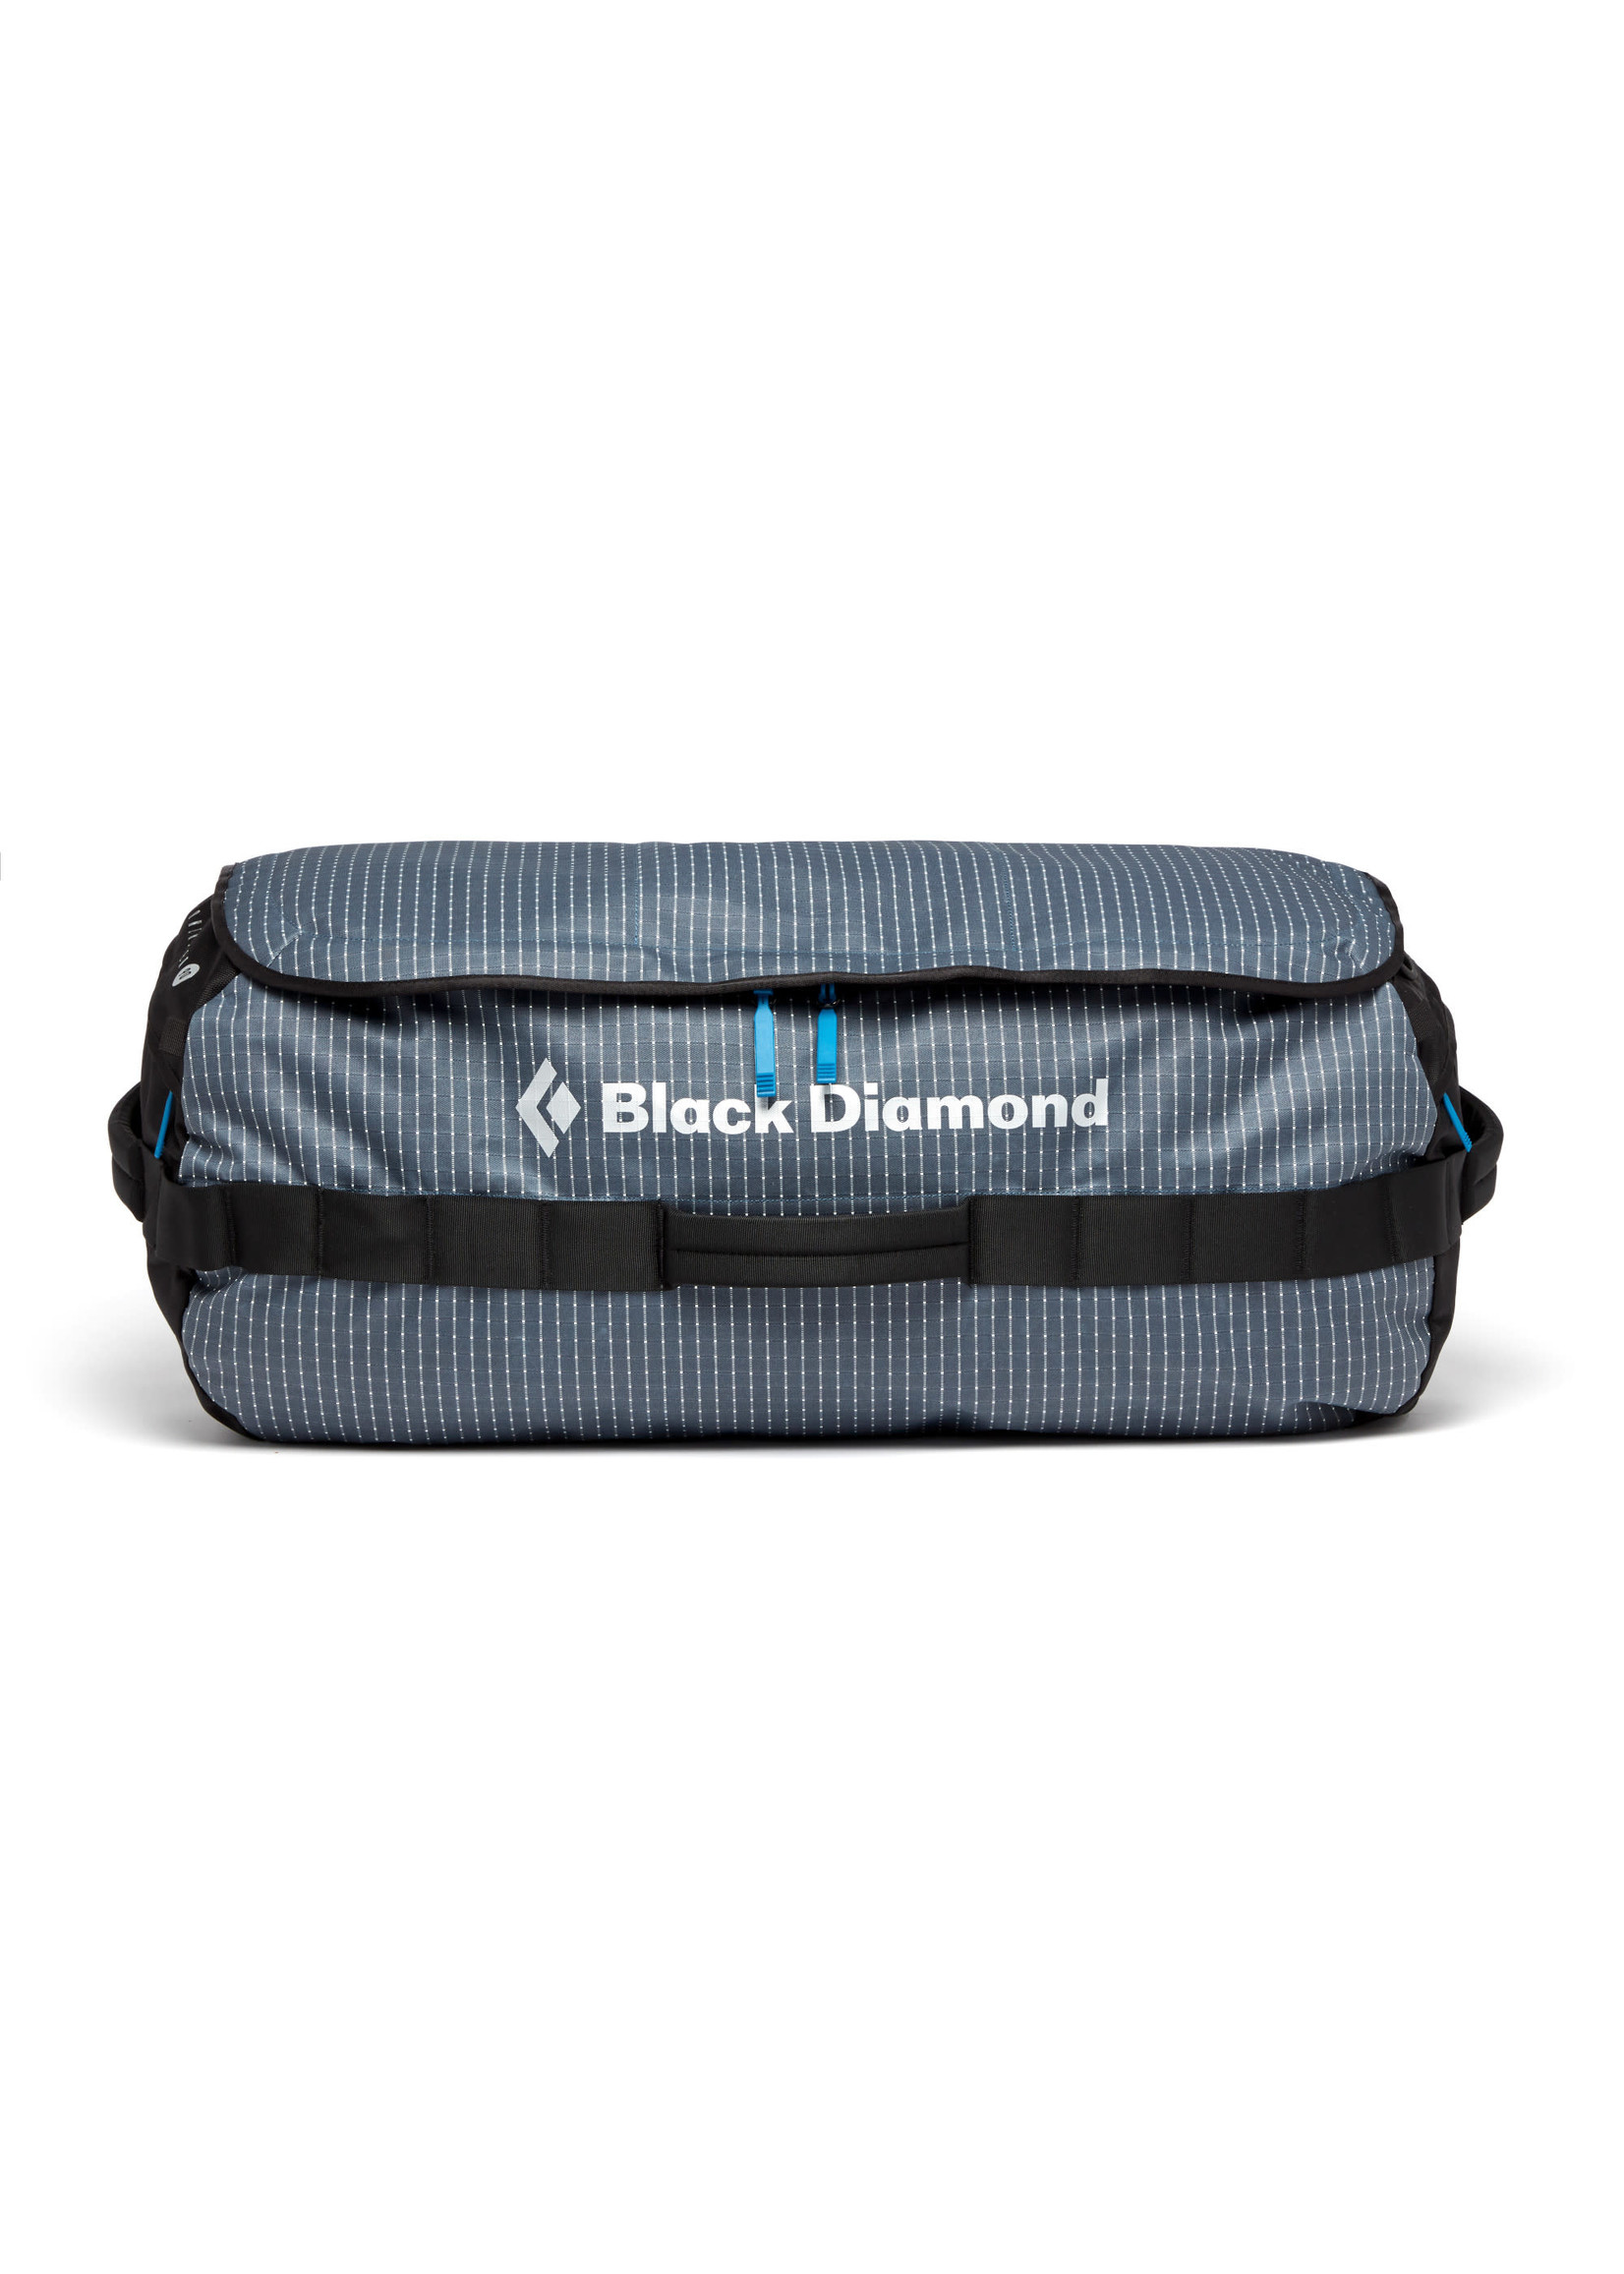 Black Diamond Black Diamond Stonehauler 90 L Duffel Bag